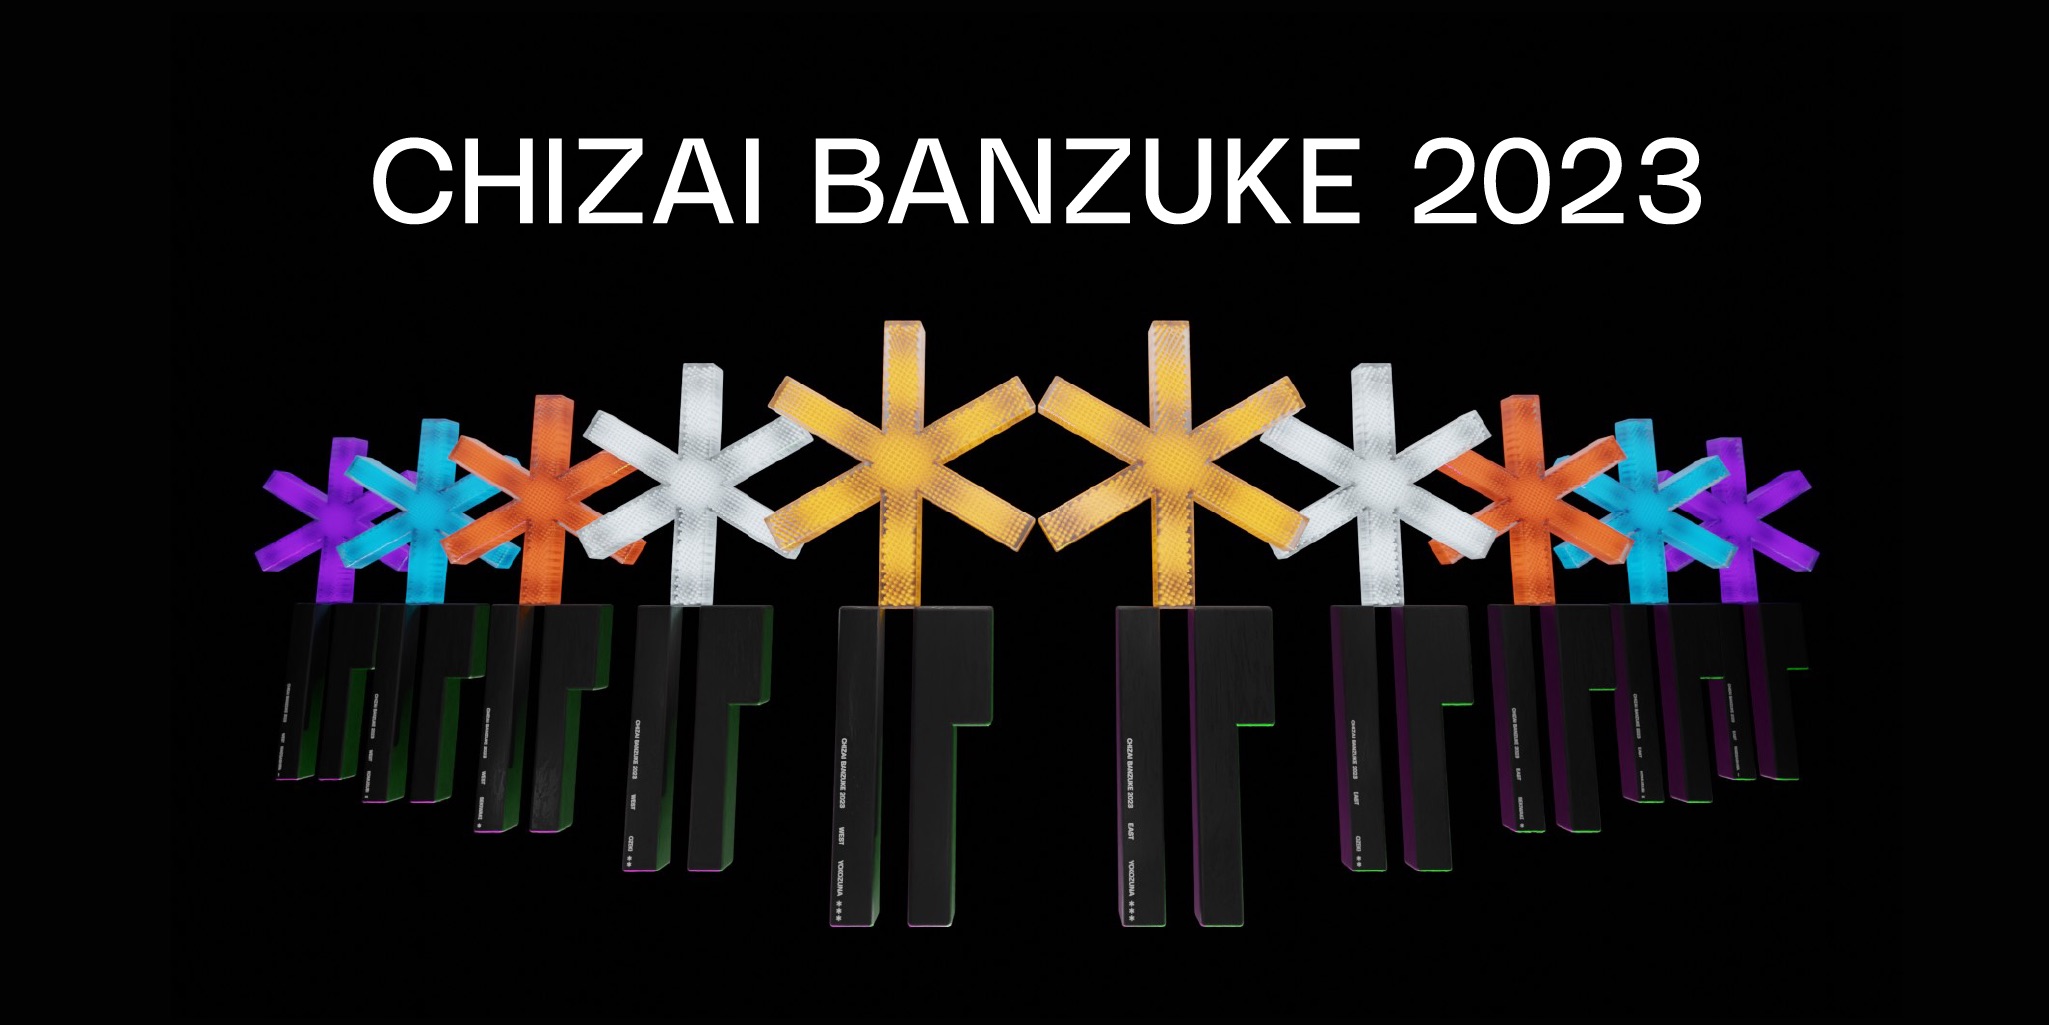 chizaibanzuke2023 news KV